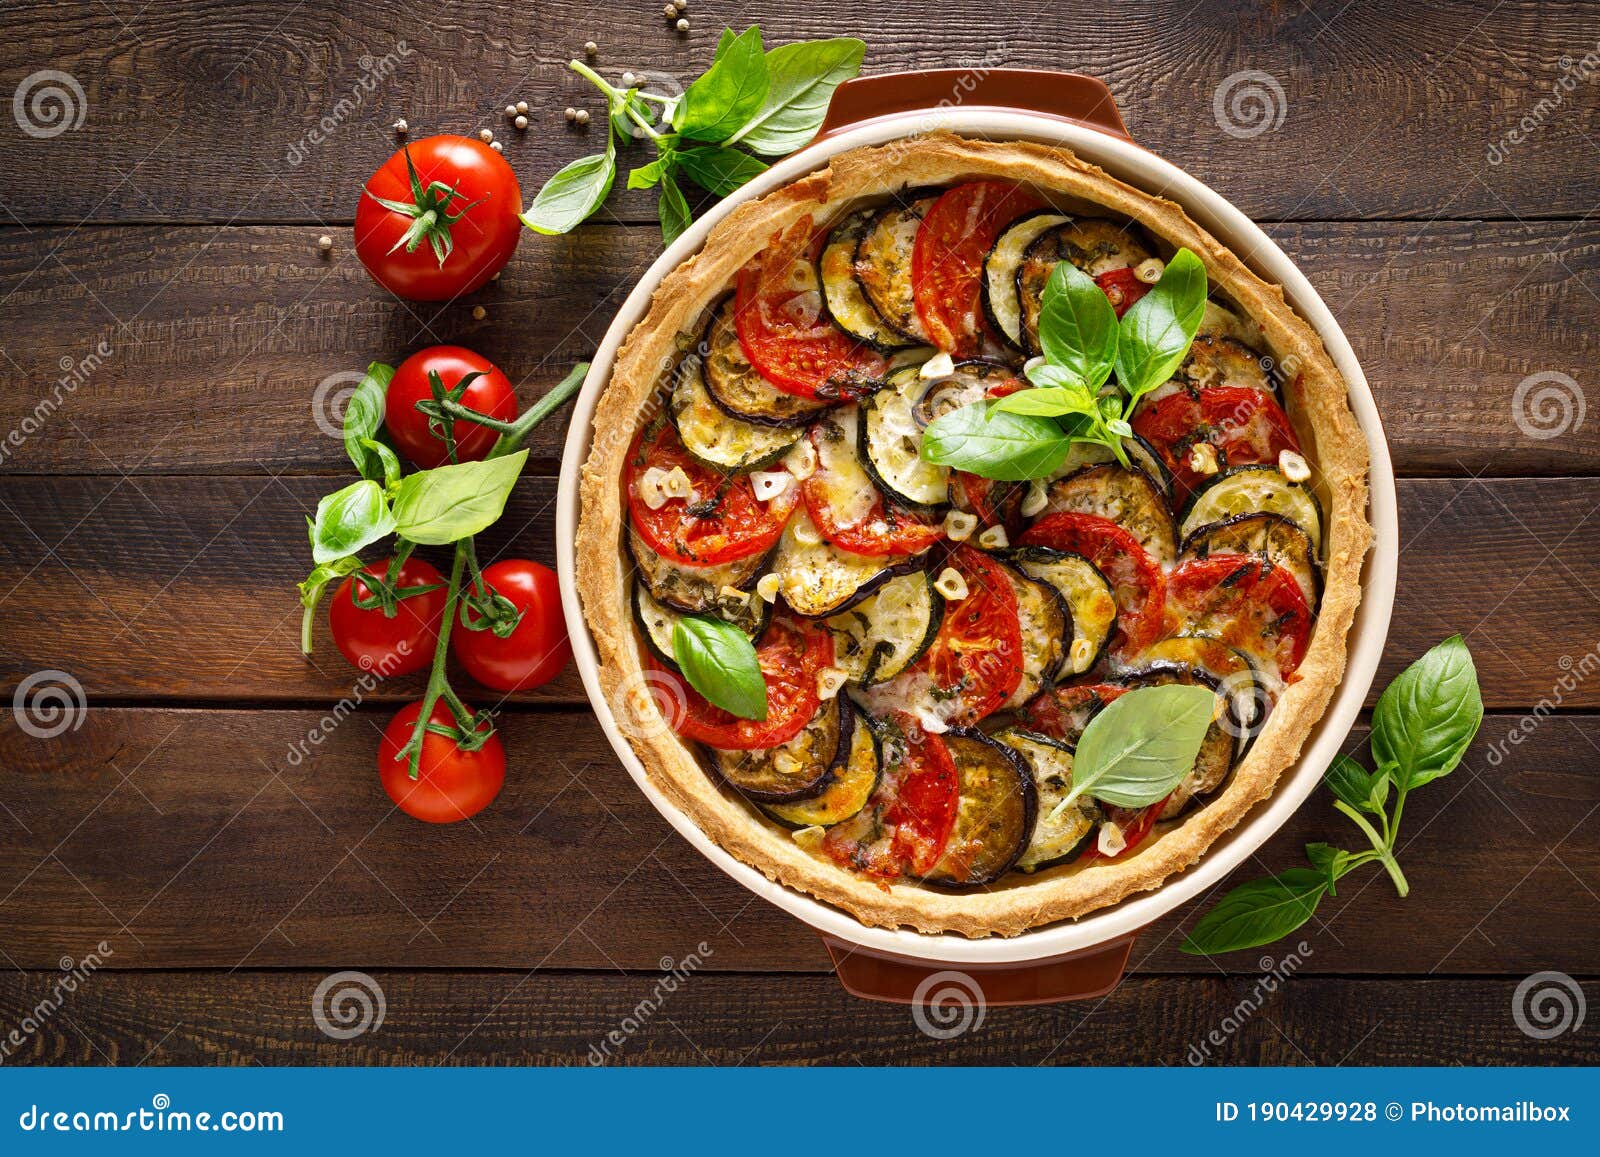 tart with vegetables. homemade savory tart with eggplant, zucchini, tomatoes, garlic, mozzarella cheese and fresh basil. mediterra